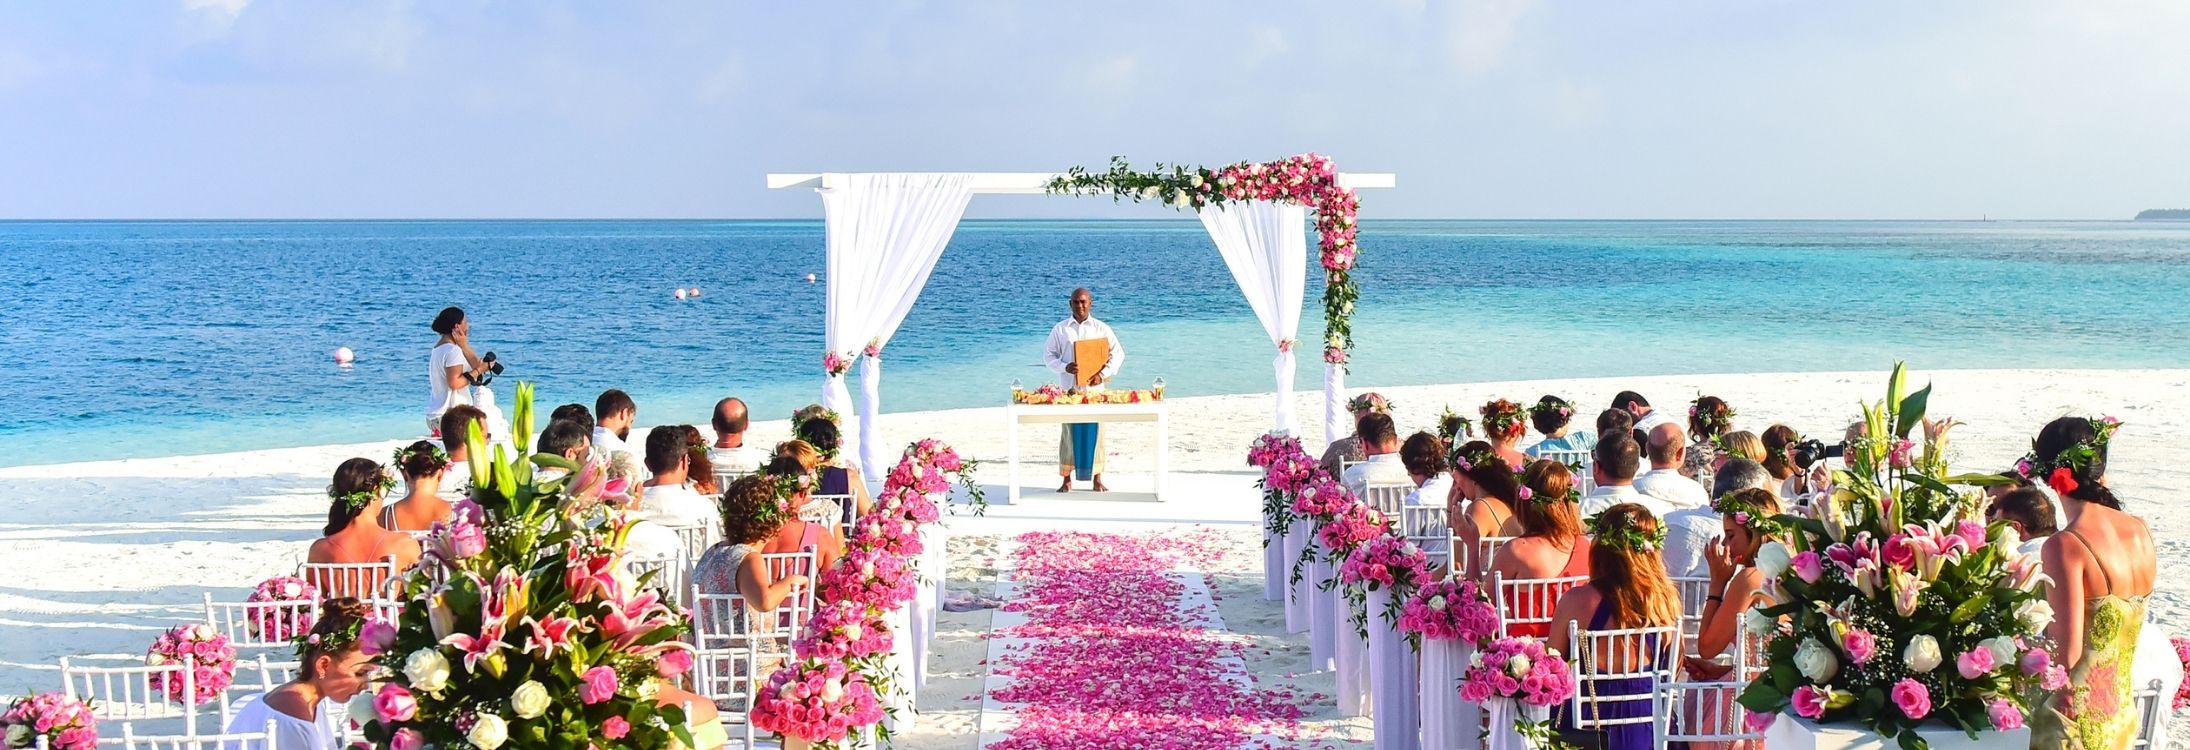 6 'Shaandaar' Places For A Destination Wedding